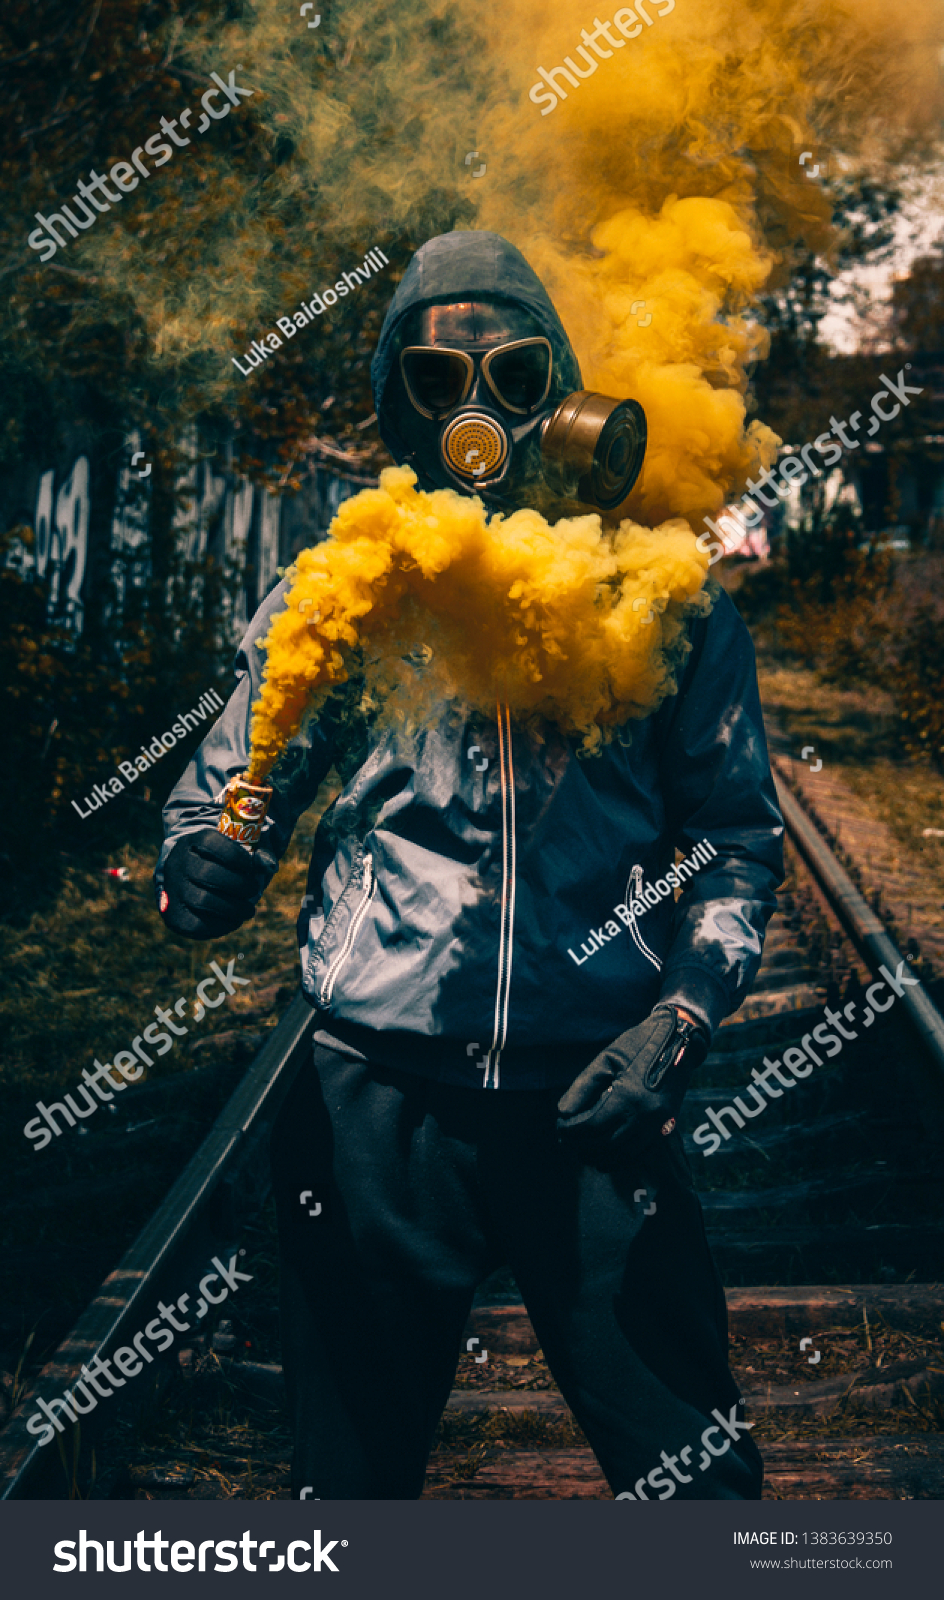 Download Gas Mask Yellow Smoke The Arts Stock Image 1383639350 Yellowimages Mockups